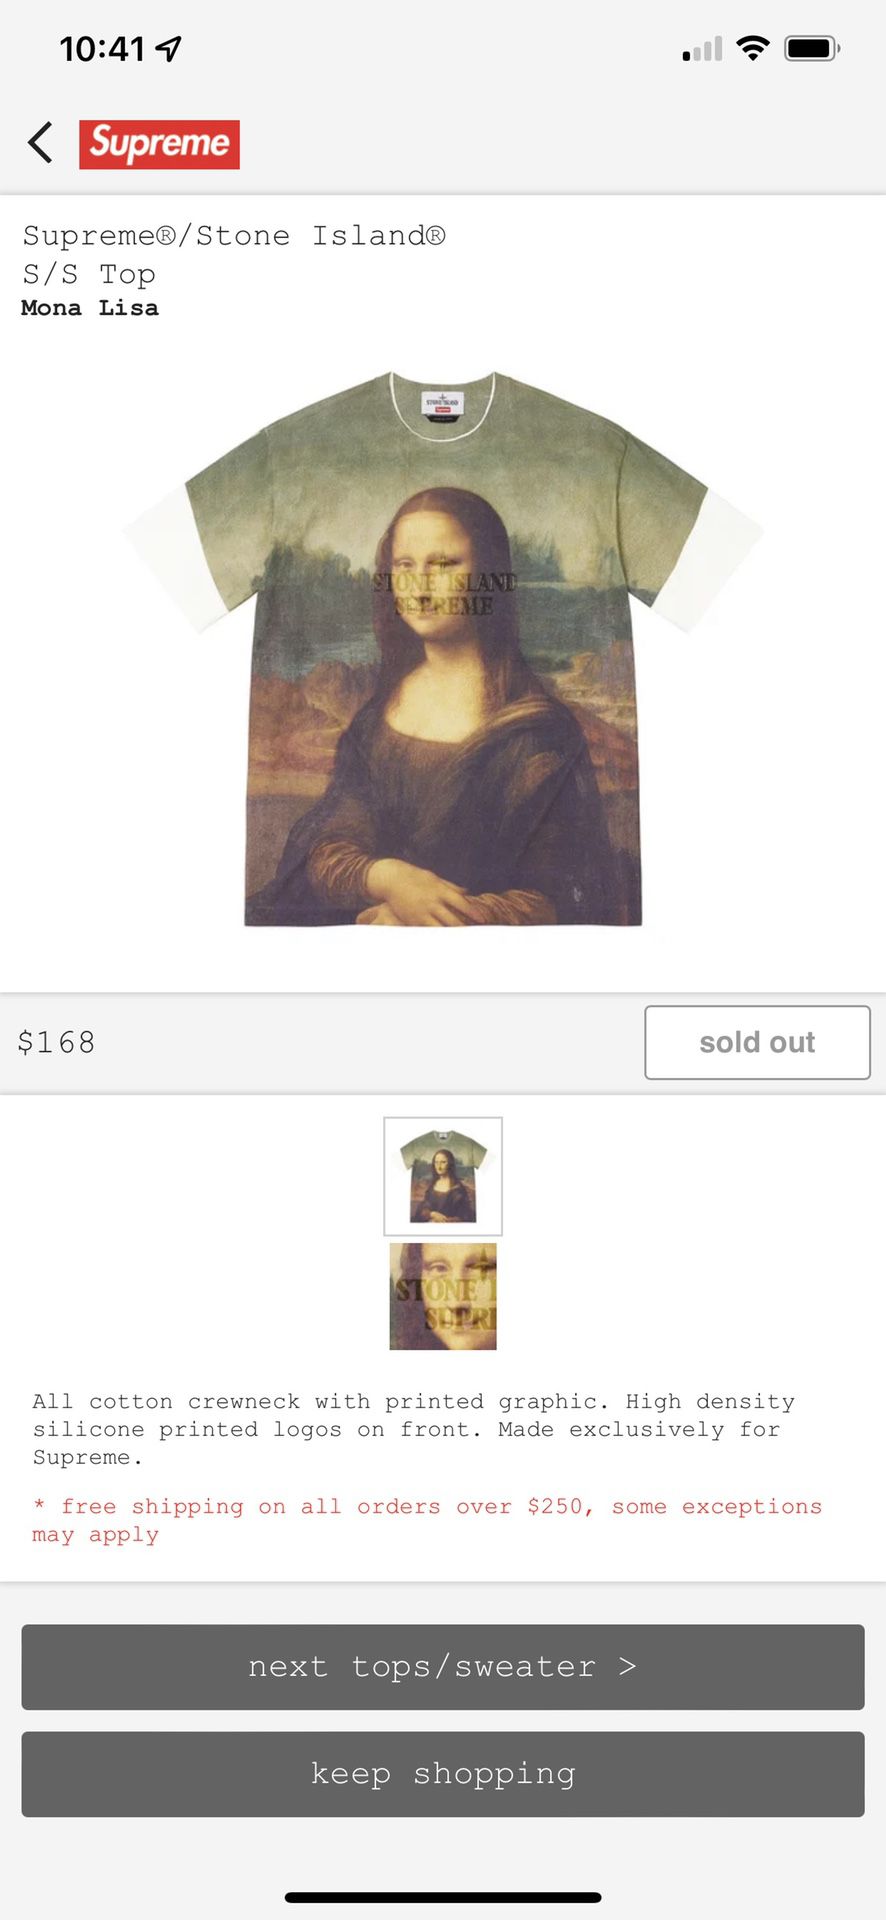 Supreme/ Stone Island Mona Lisa T-shirt *LARGE CONFIRMED*